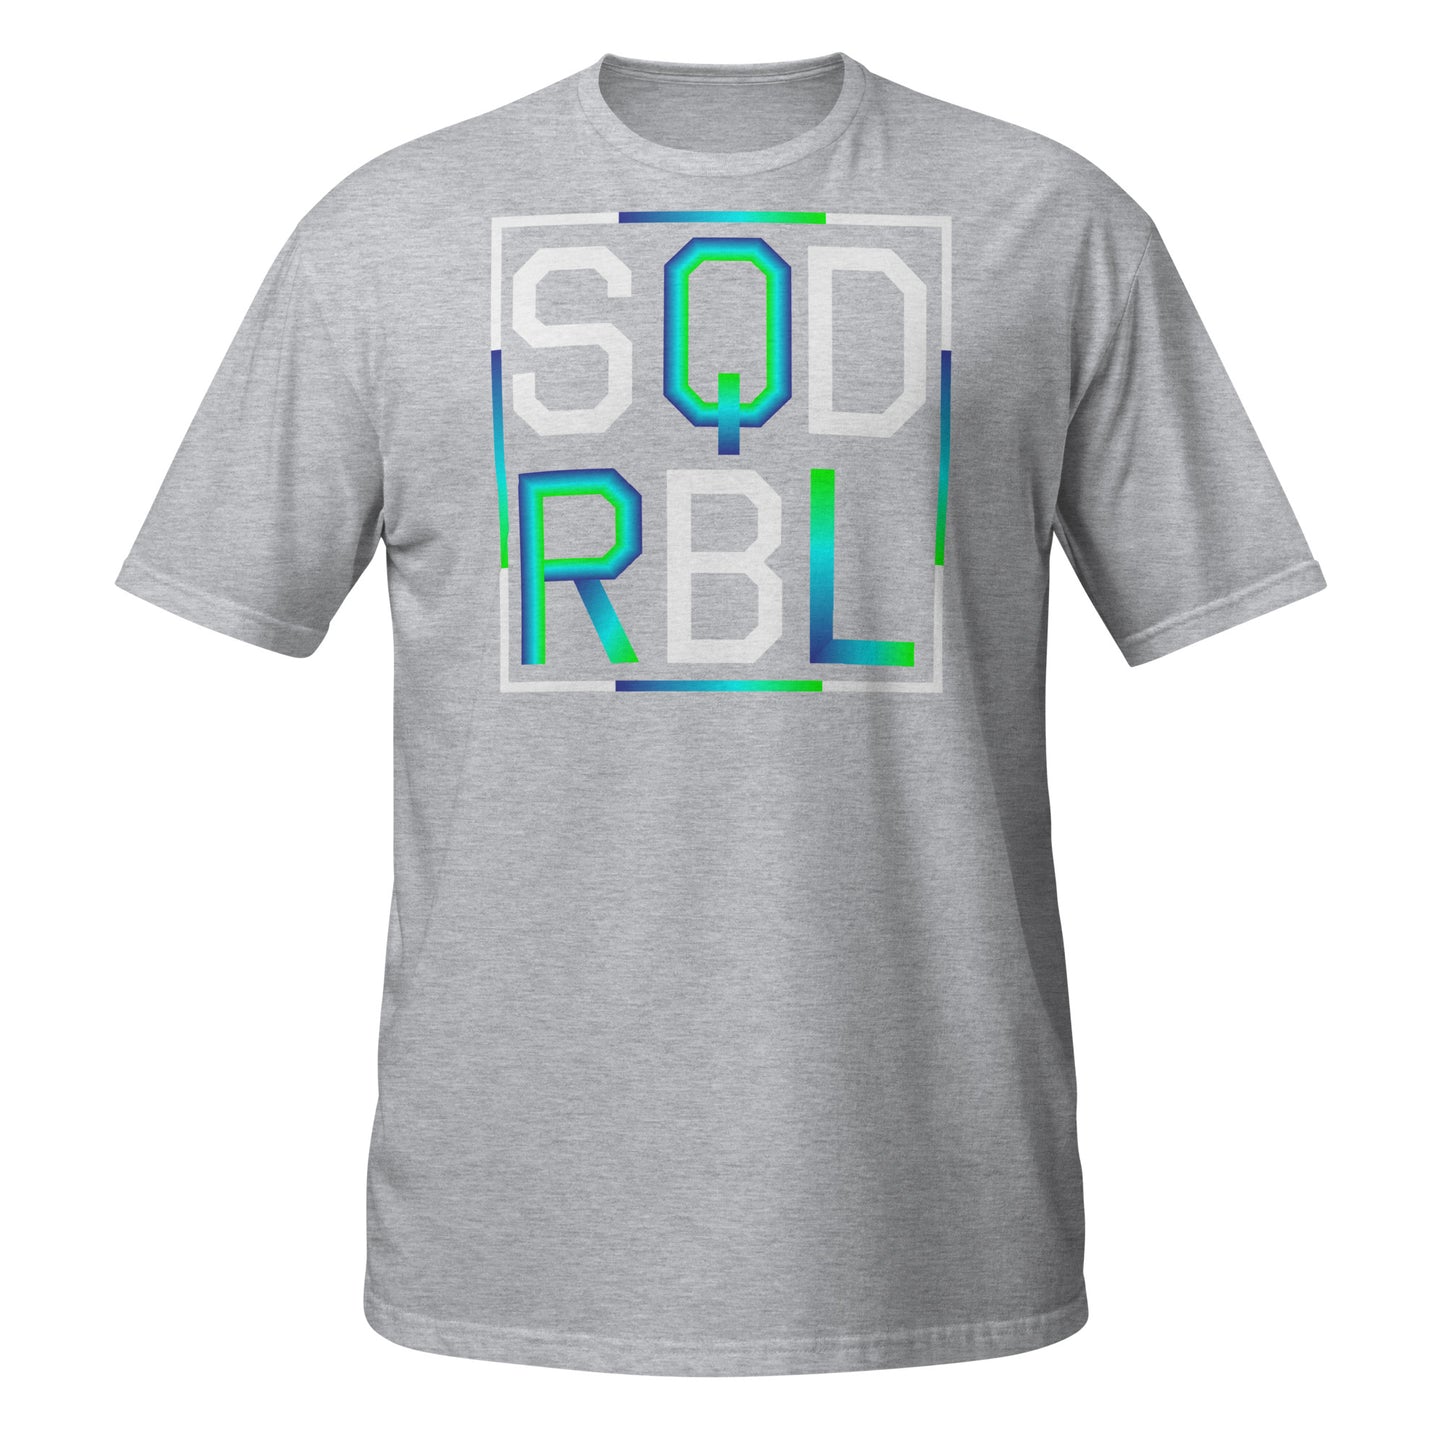 T-shirt SQD RBL - SquadRebel7 Store